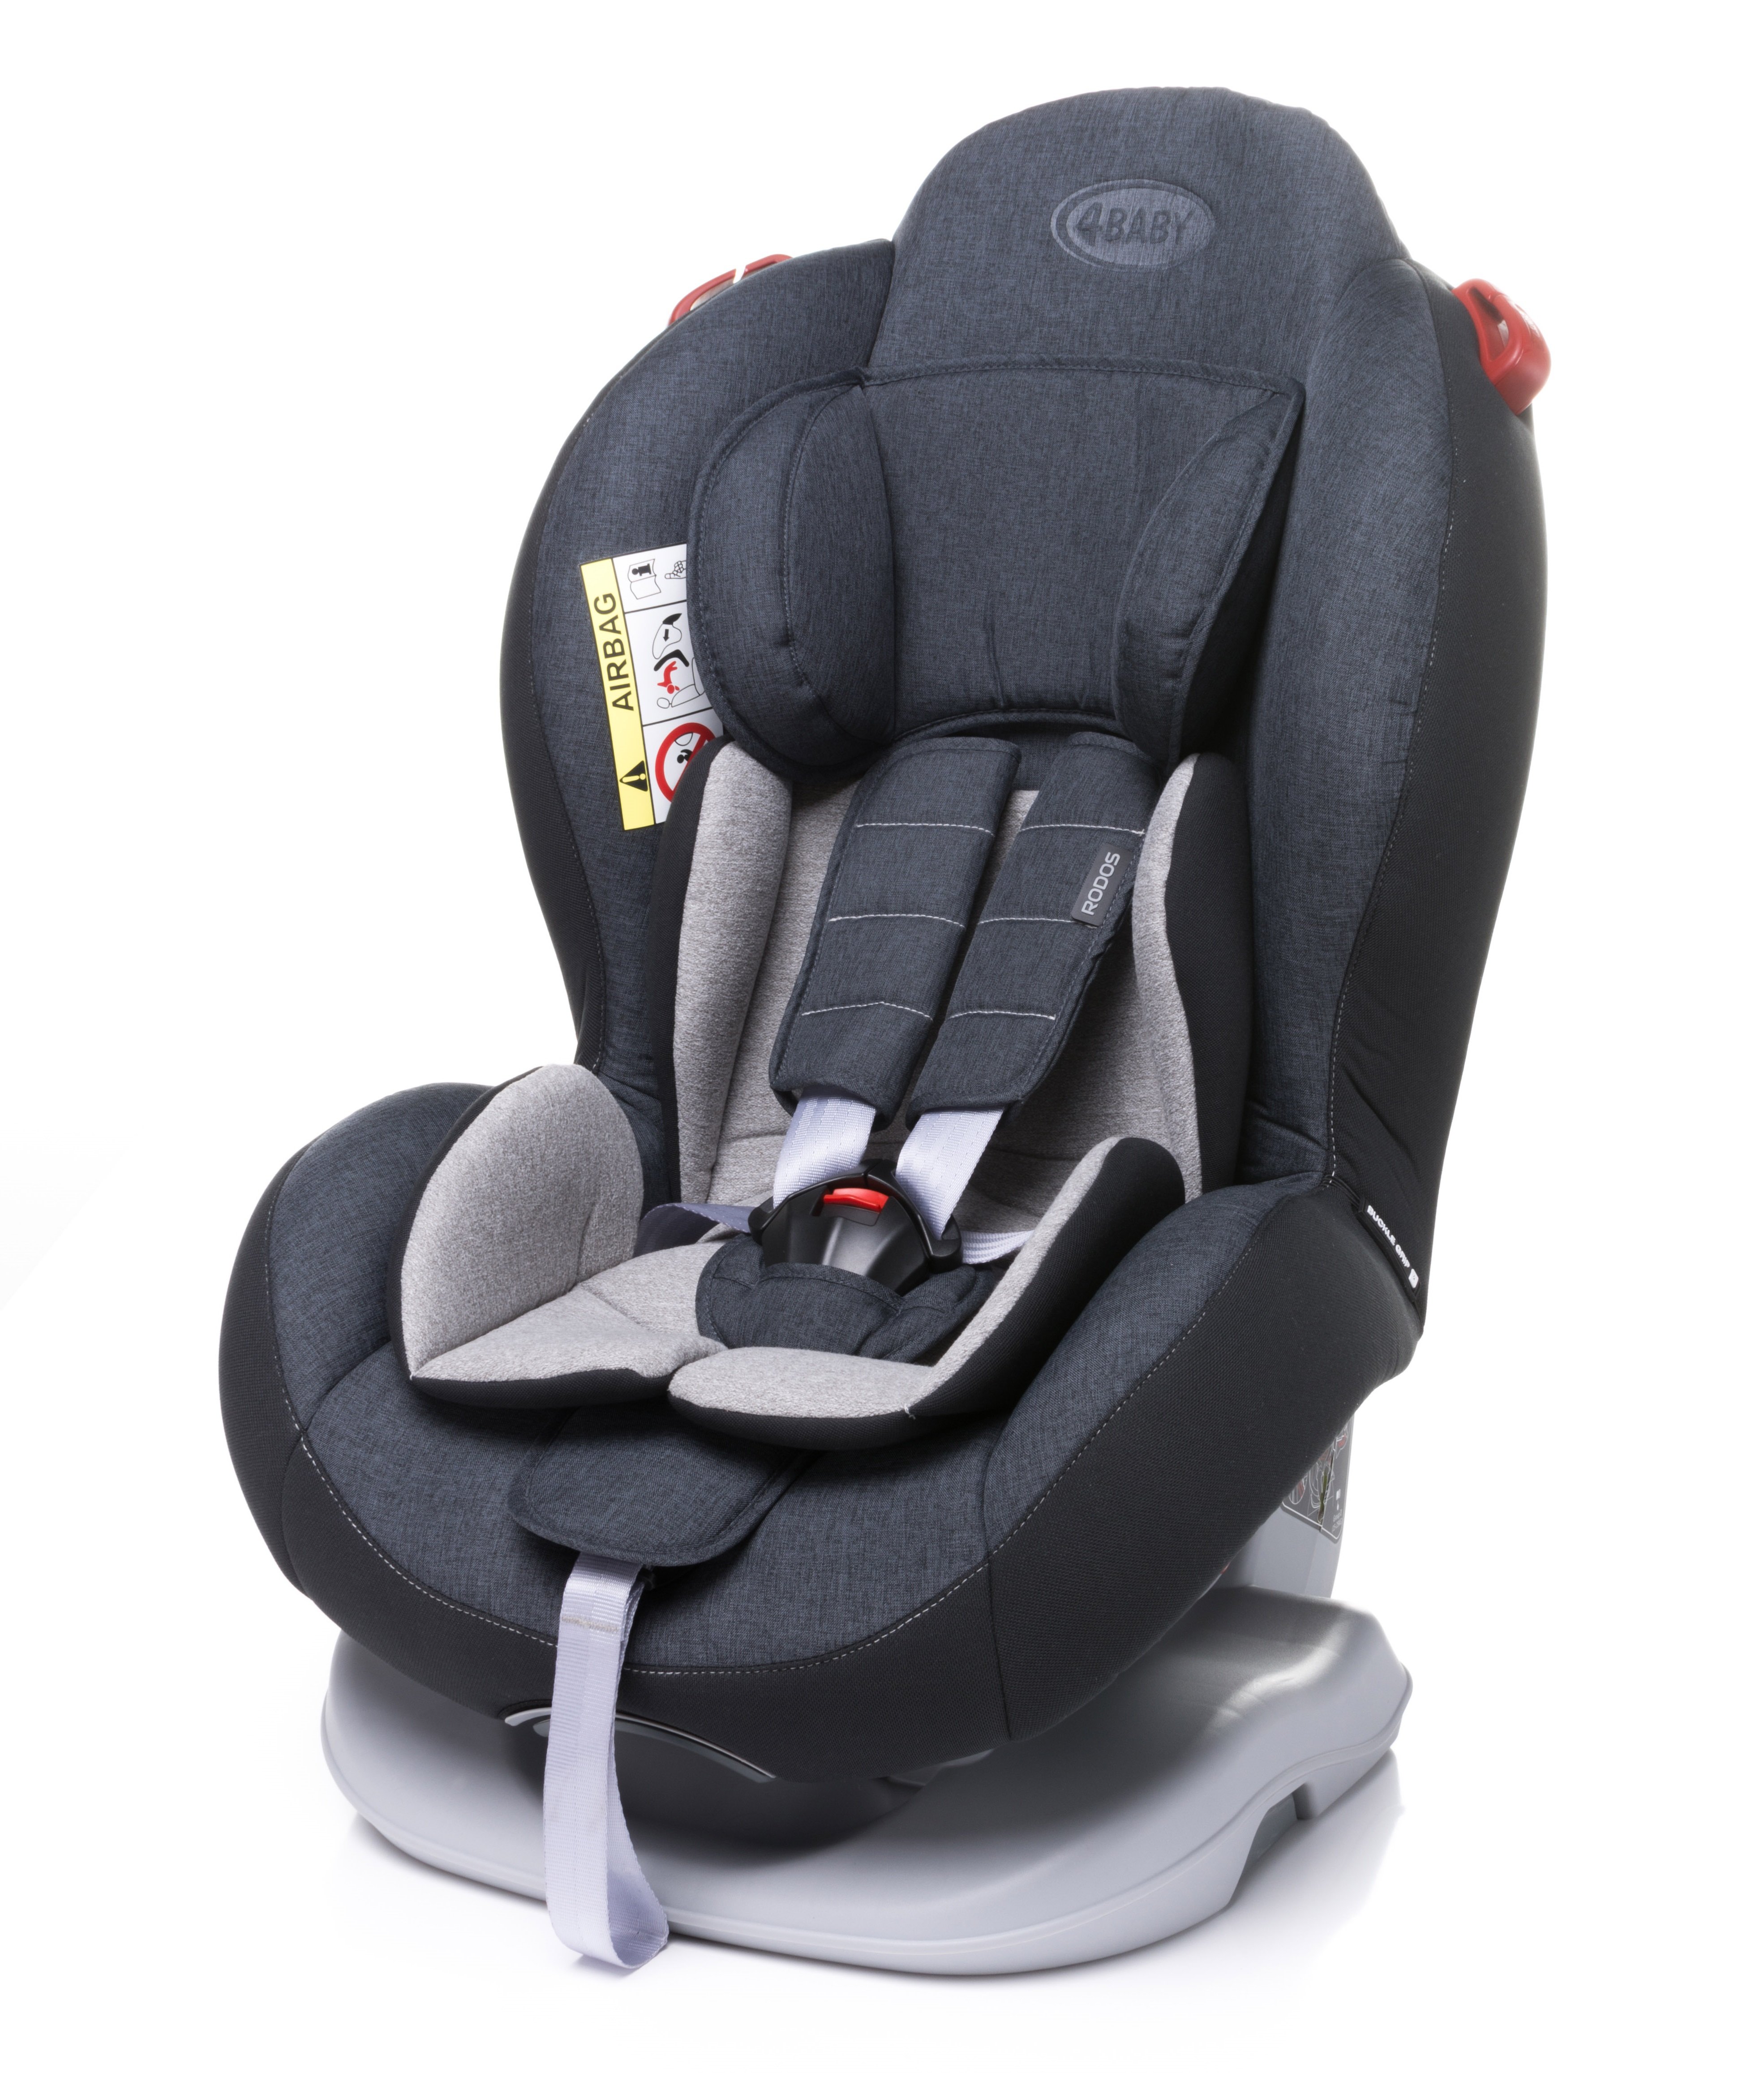 Bērnu autosēdeklis 0-25 kg 4BABY RODOS dark grey